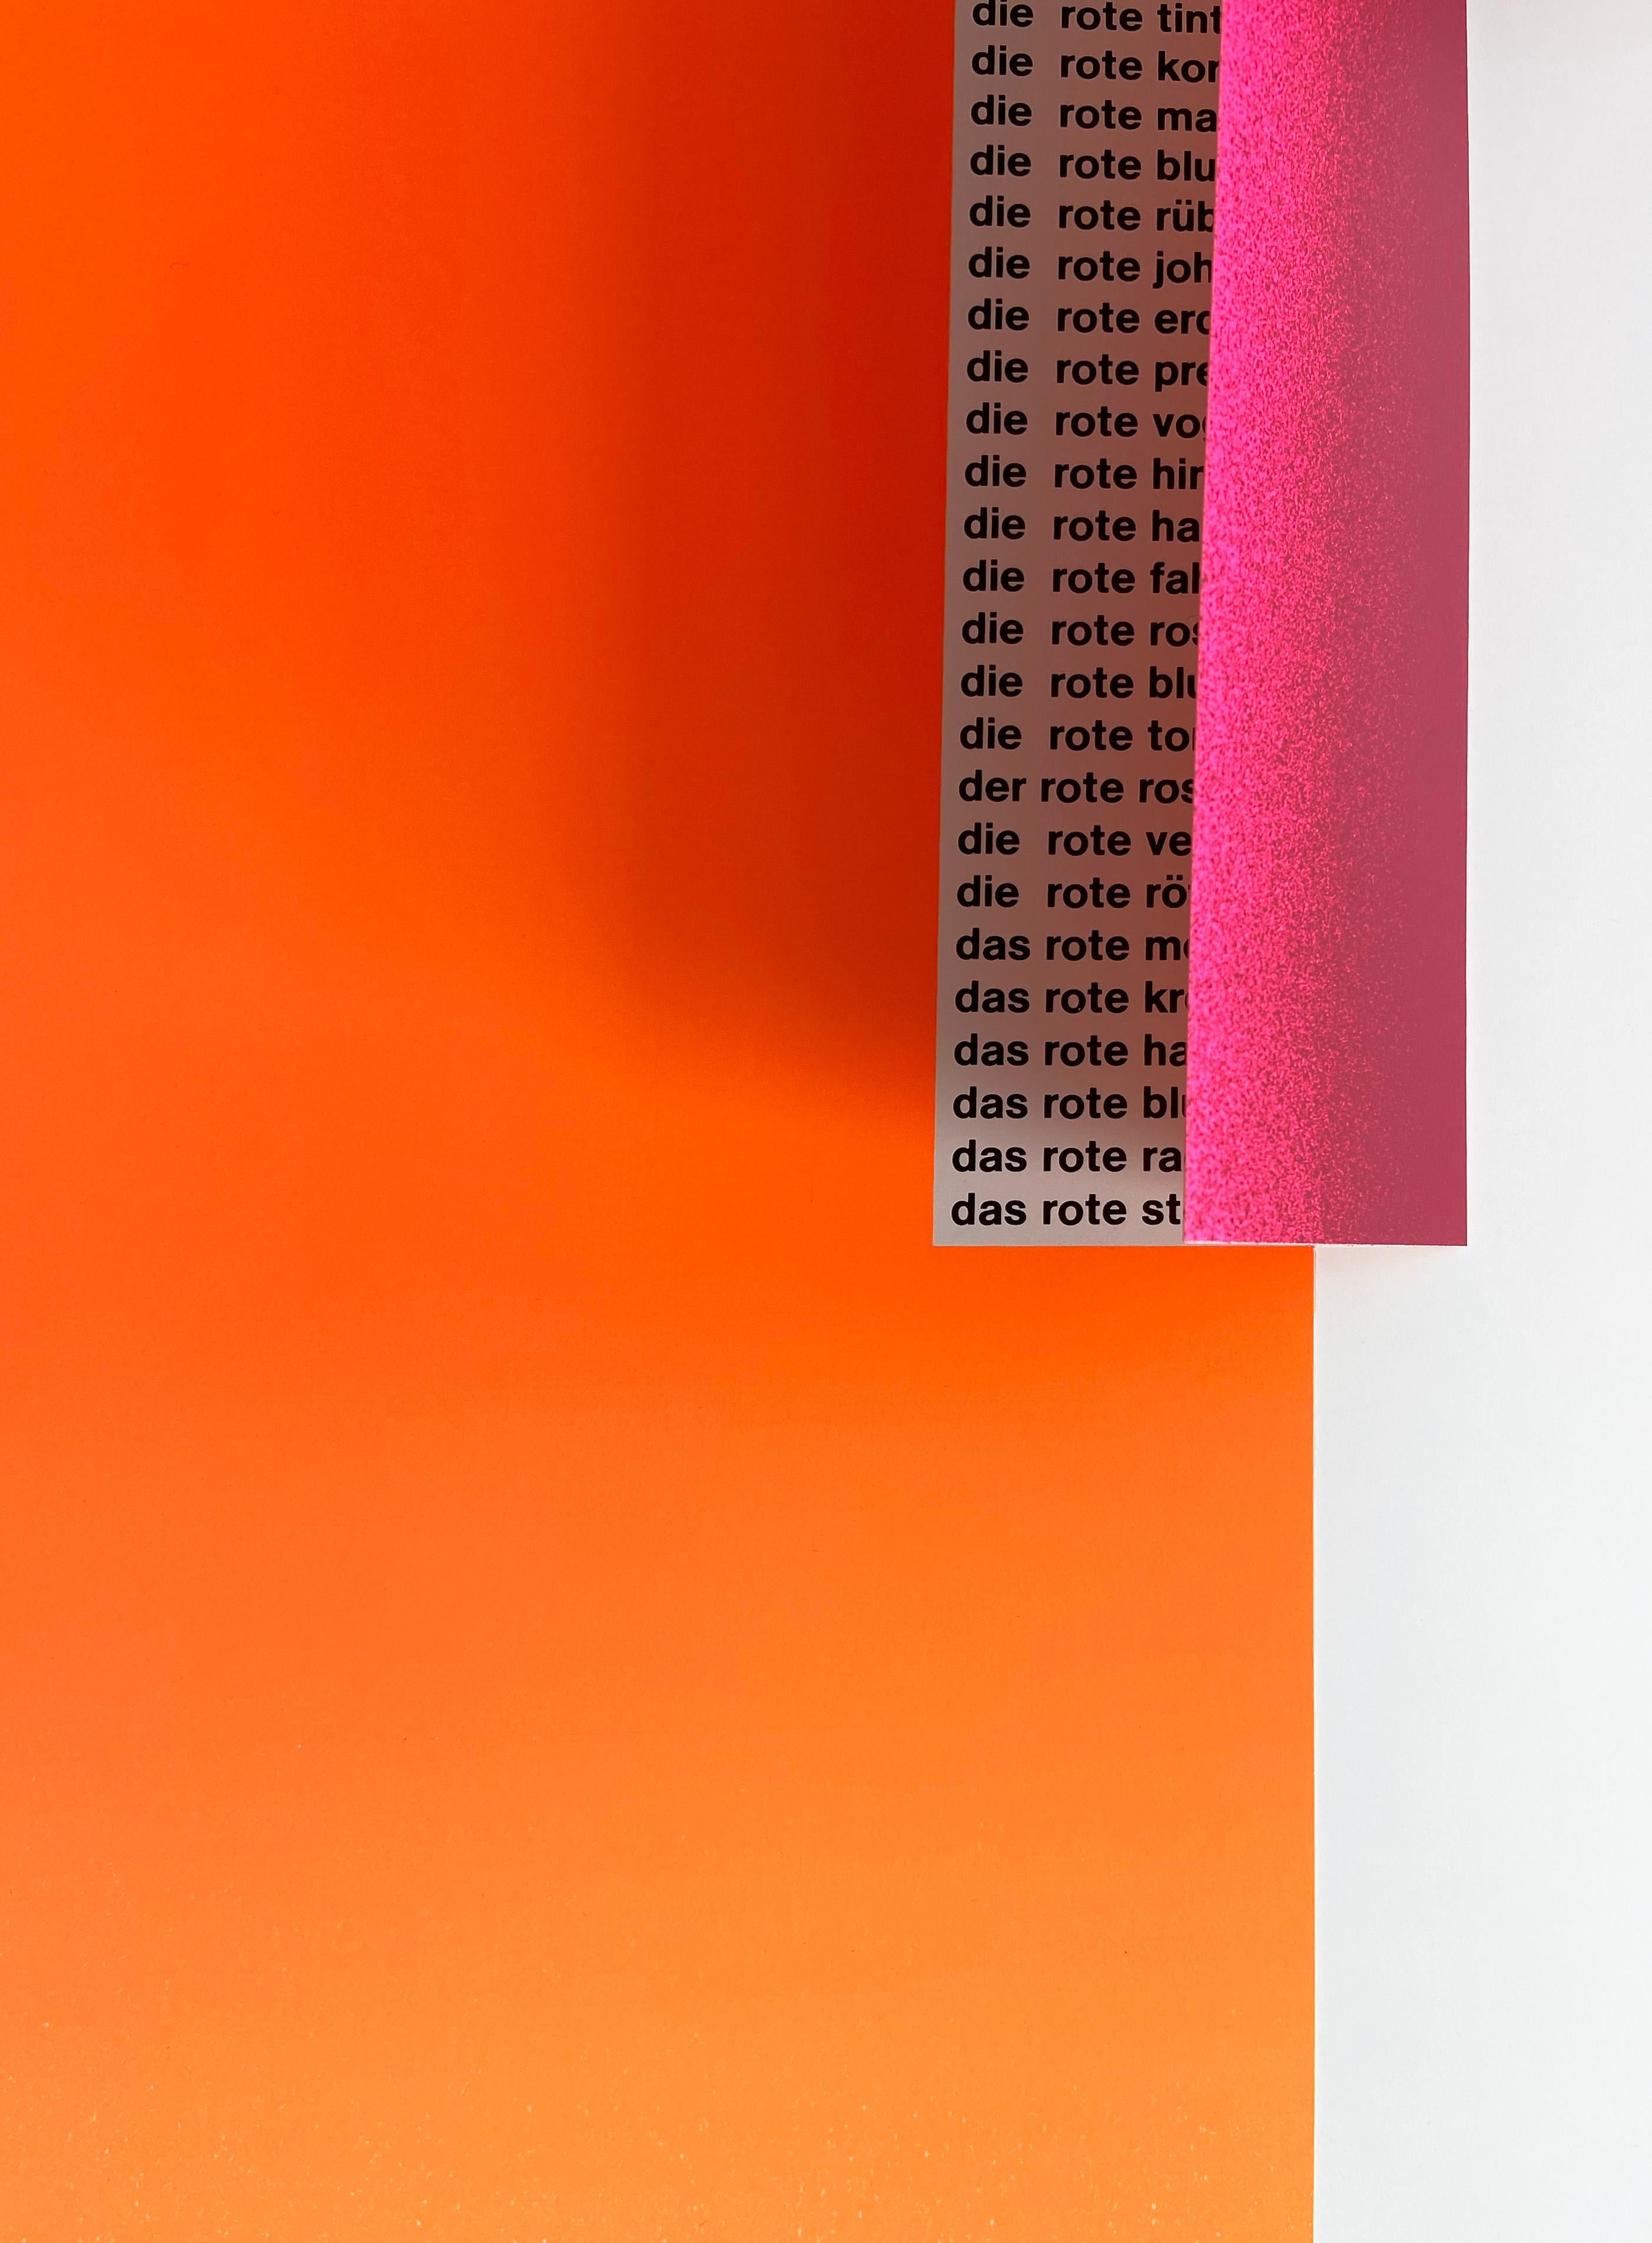 Rupprecht Geiger, Cold Reds on Orange: Screenprint, Abstract Art, Signed Print 1